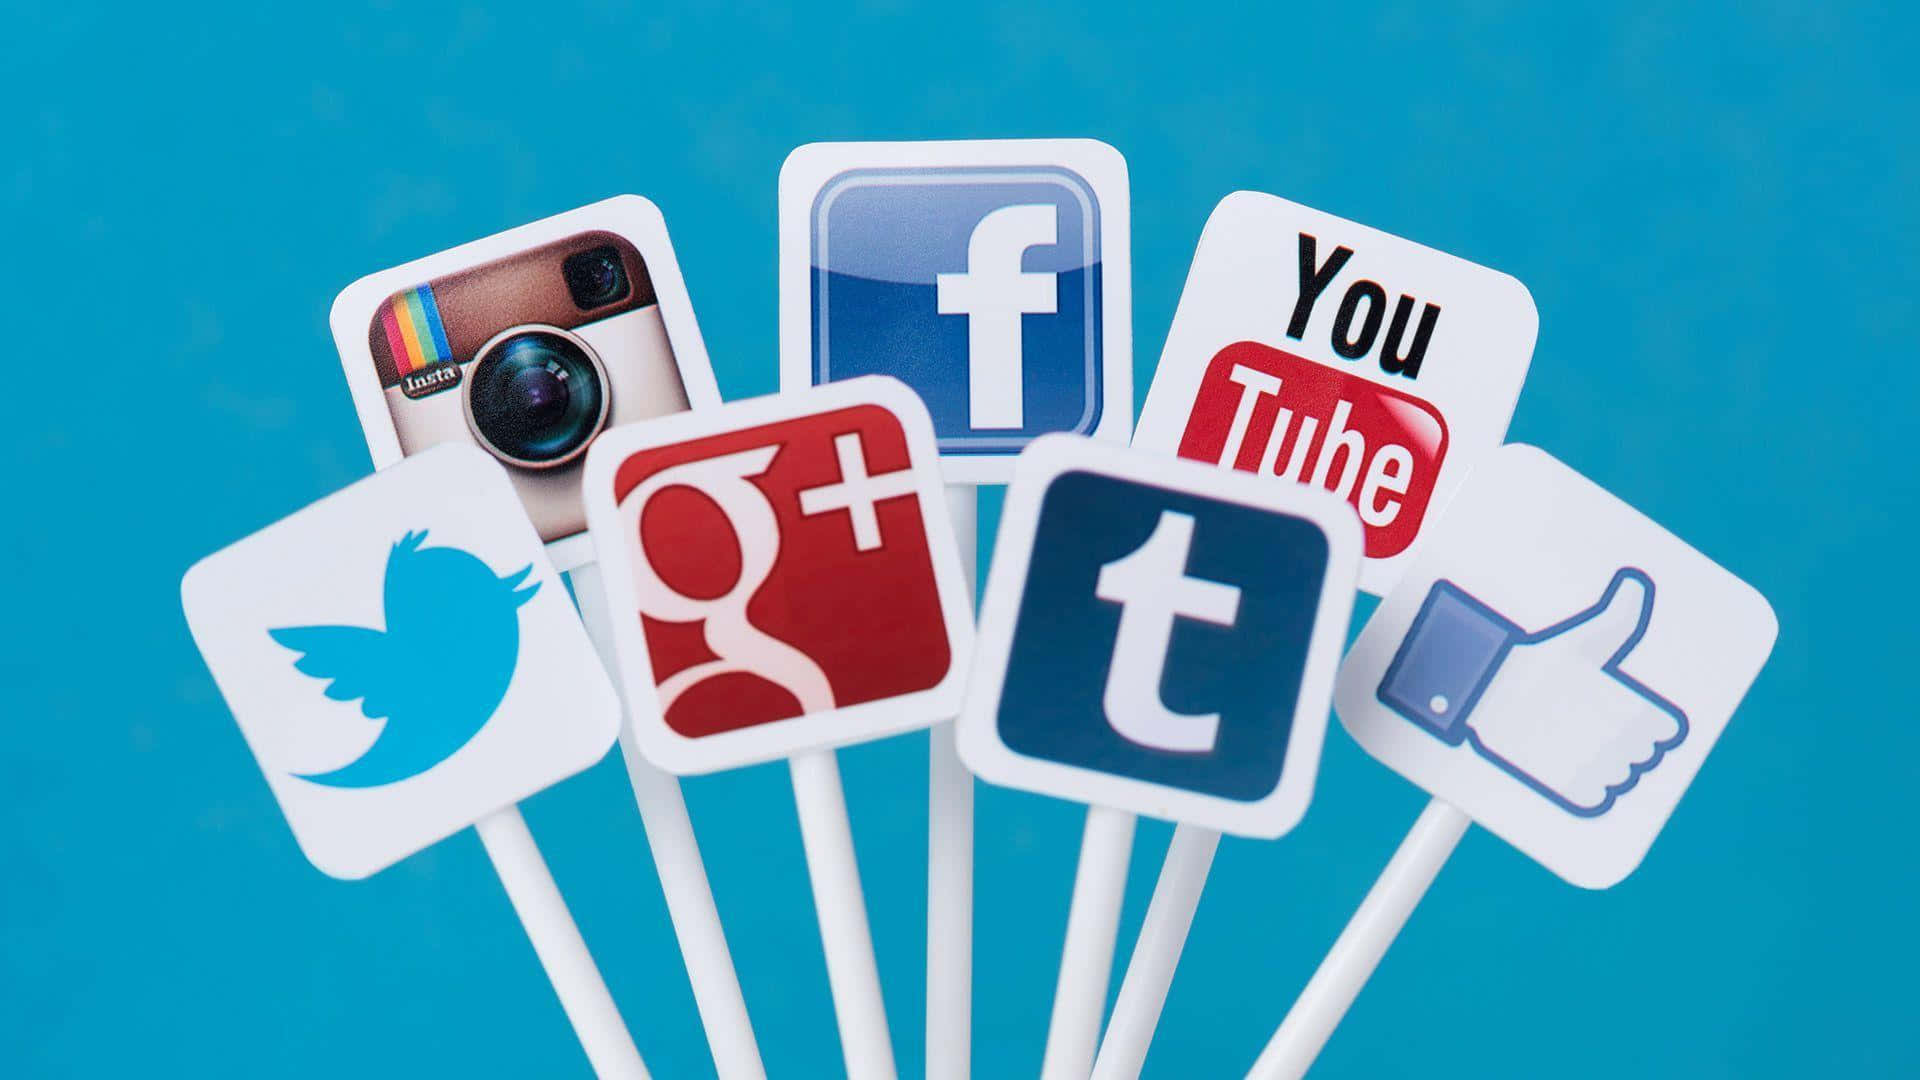 Social Media Icons On Sticks